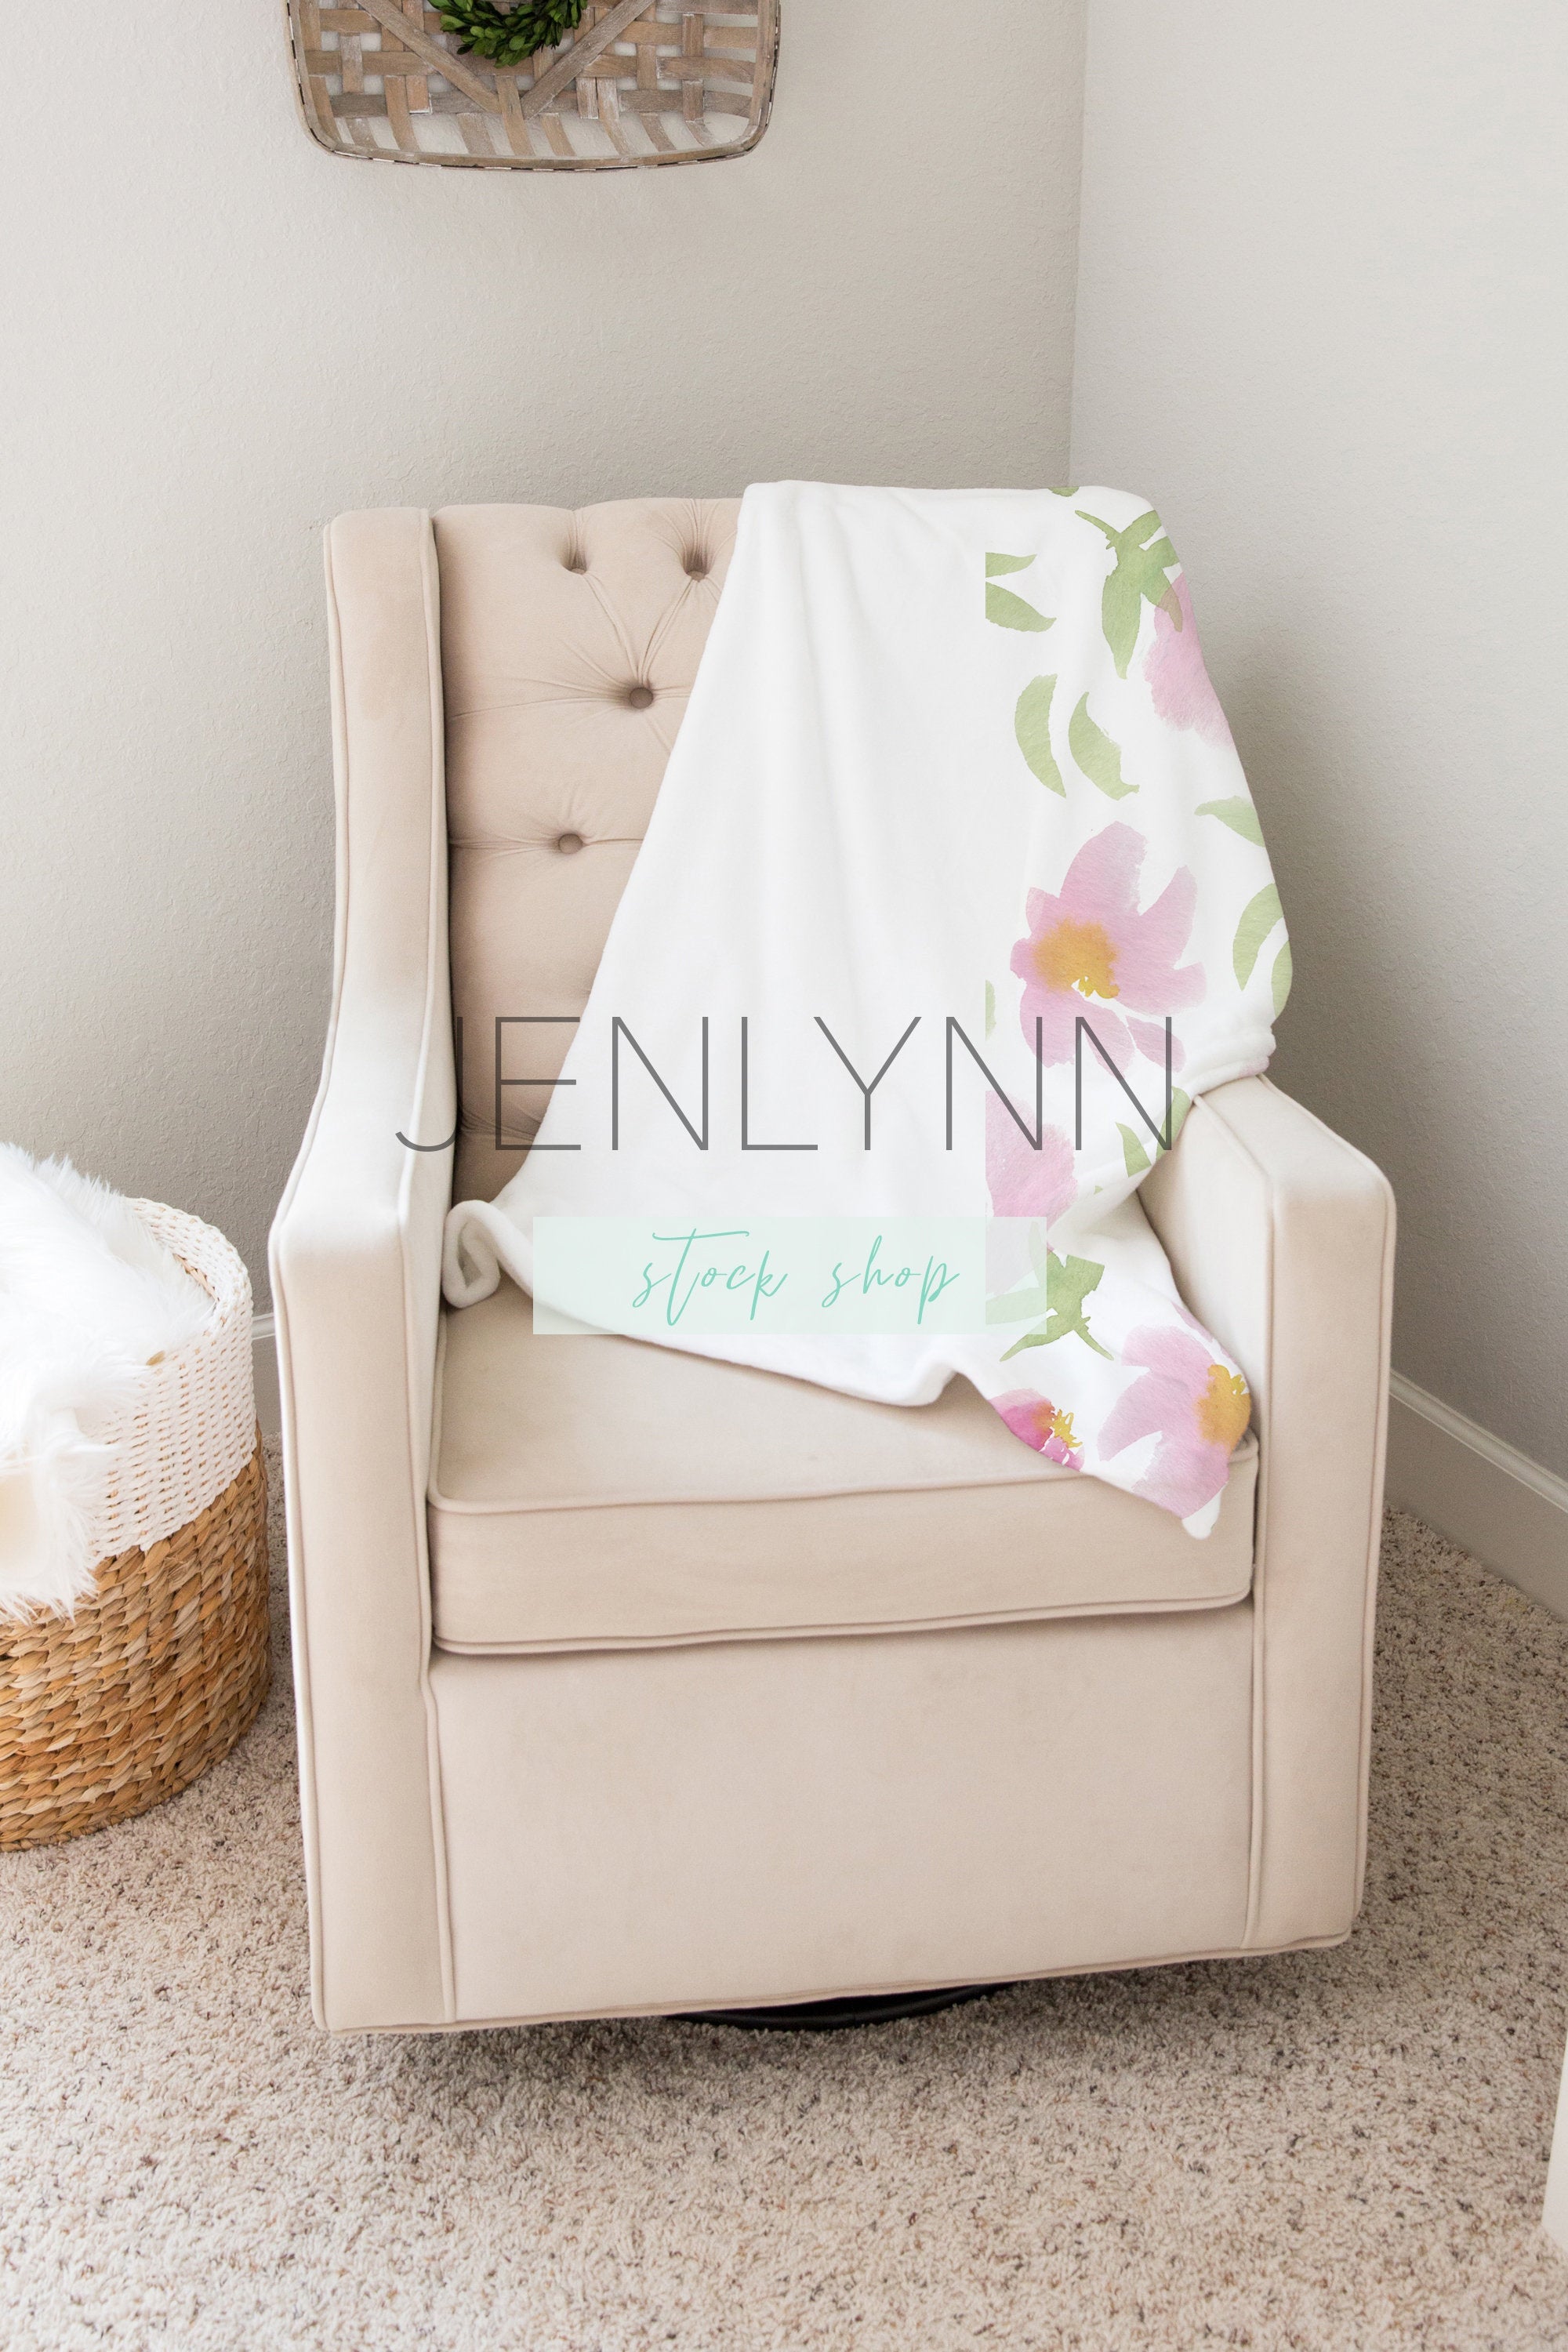 Minky Blanket Mockup on Nursery Chair #7